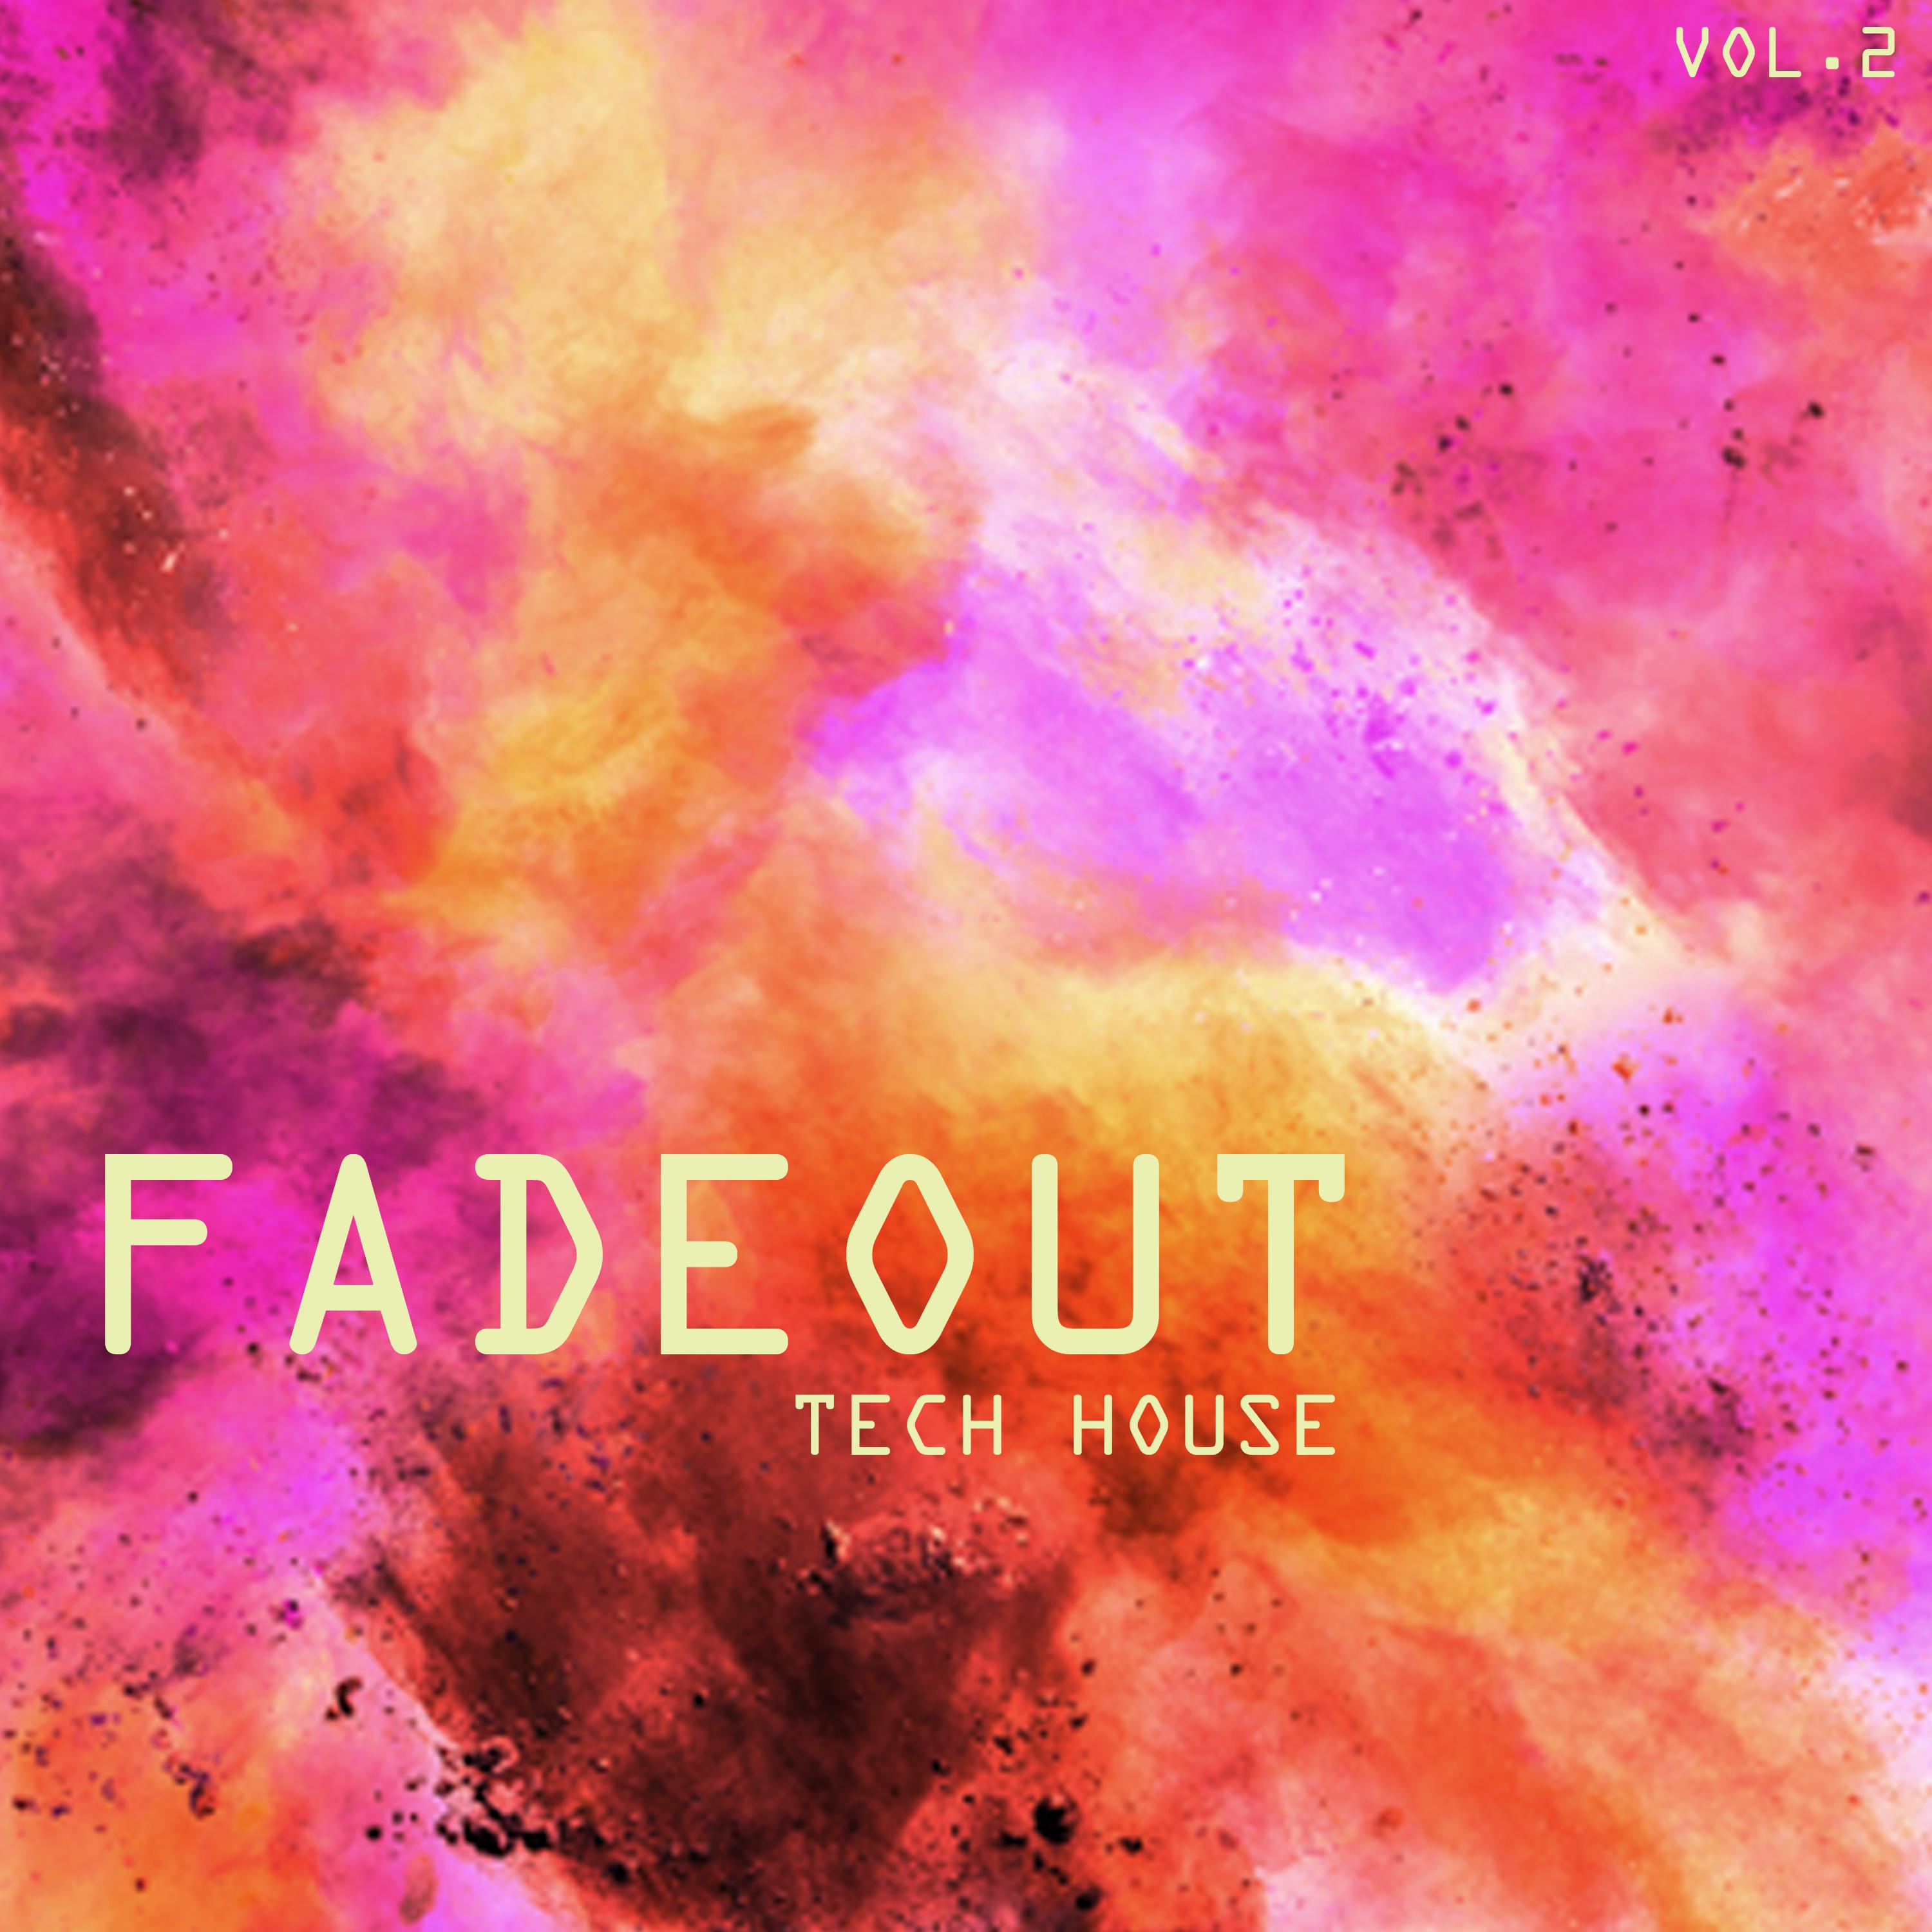 Fade Out Tech House, Vol. 2